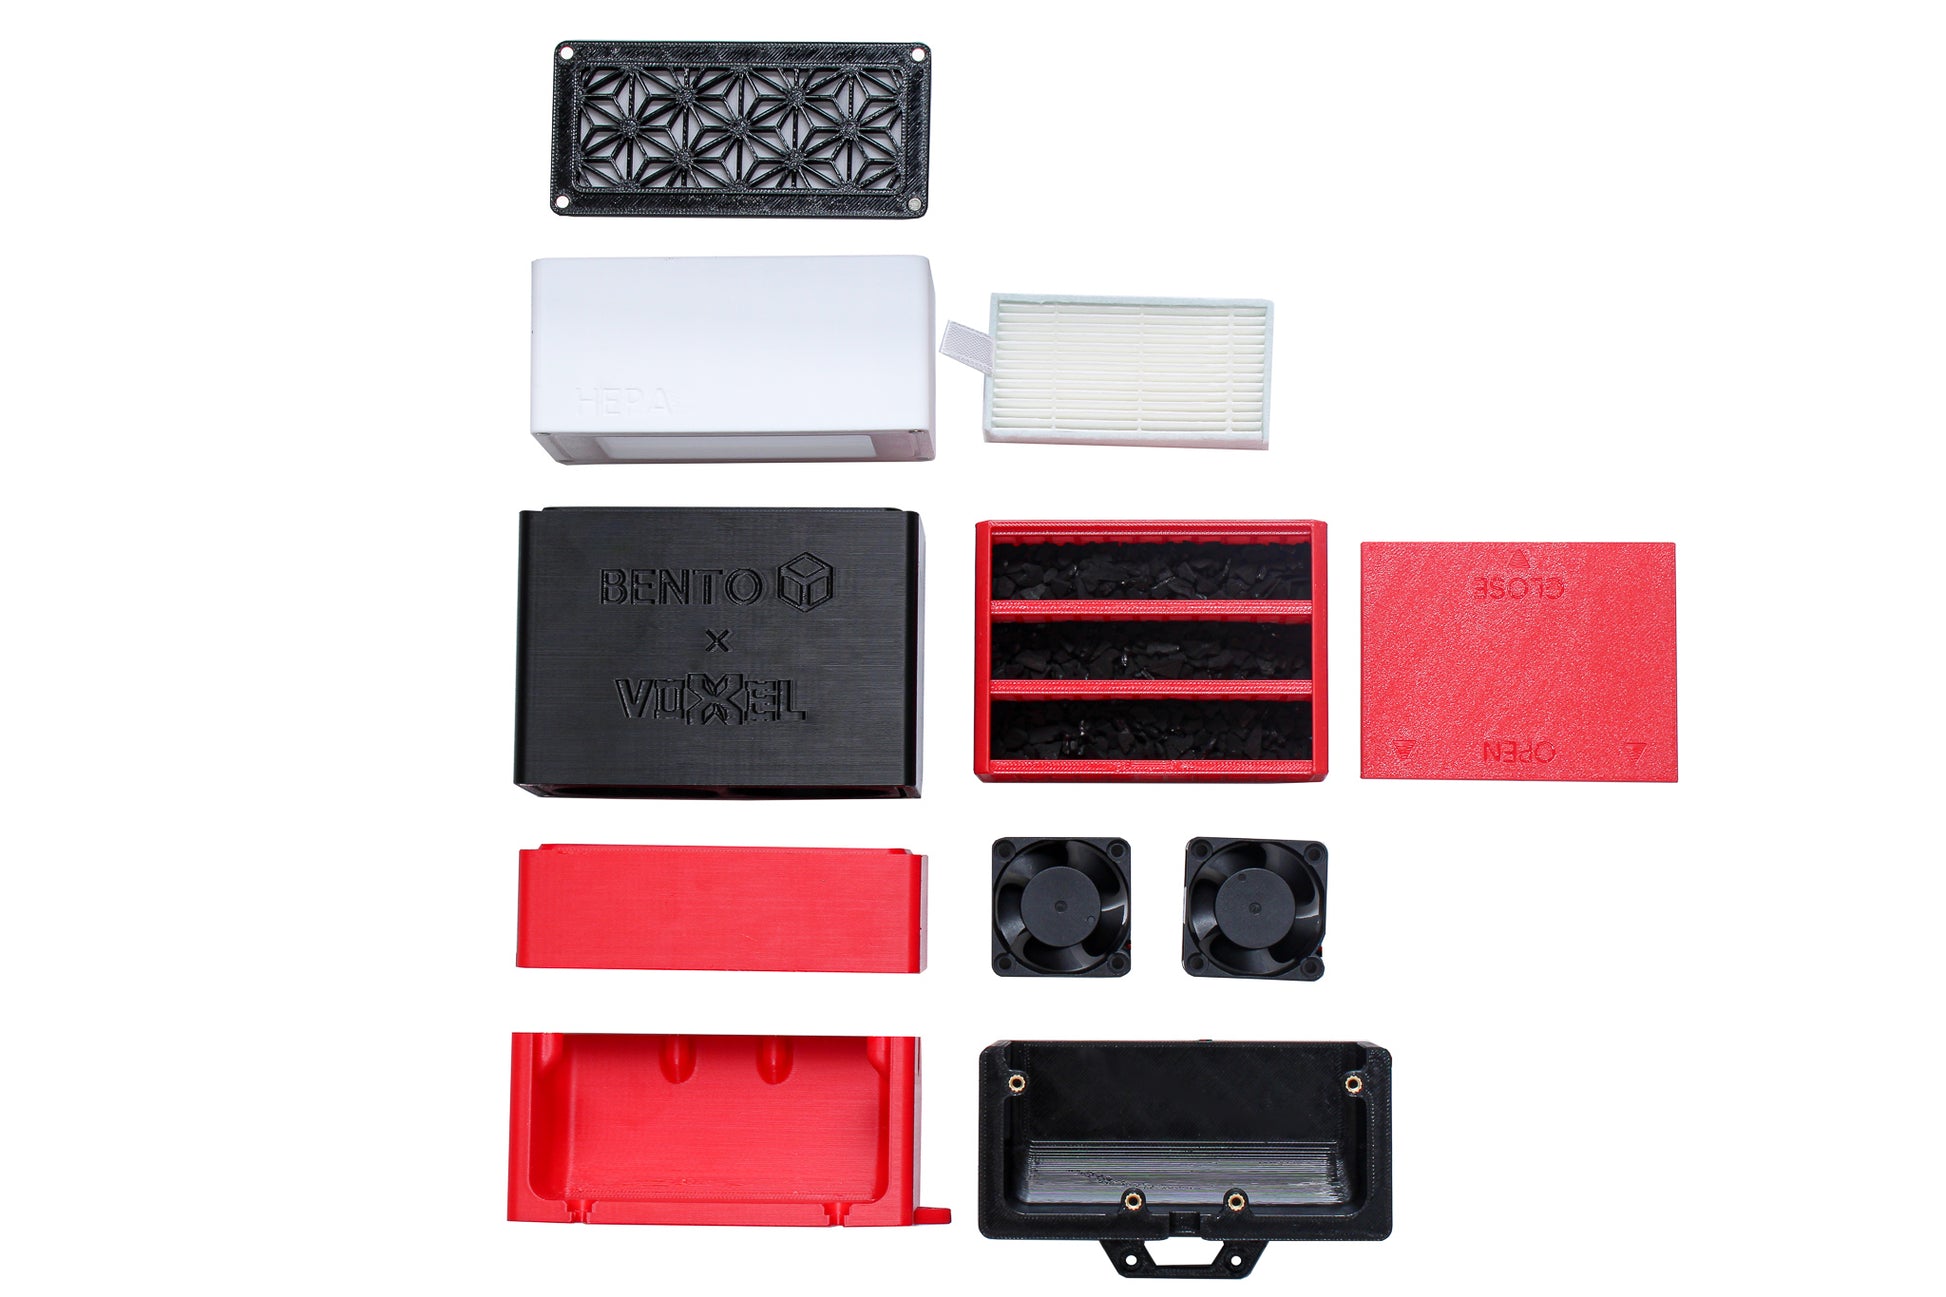 VOXELPETG PETG Plus Red Filament - $16.99 1.75mm for FDM 3D Printer –  VOXELPLA